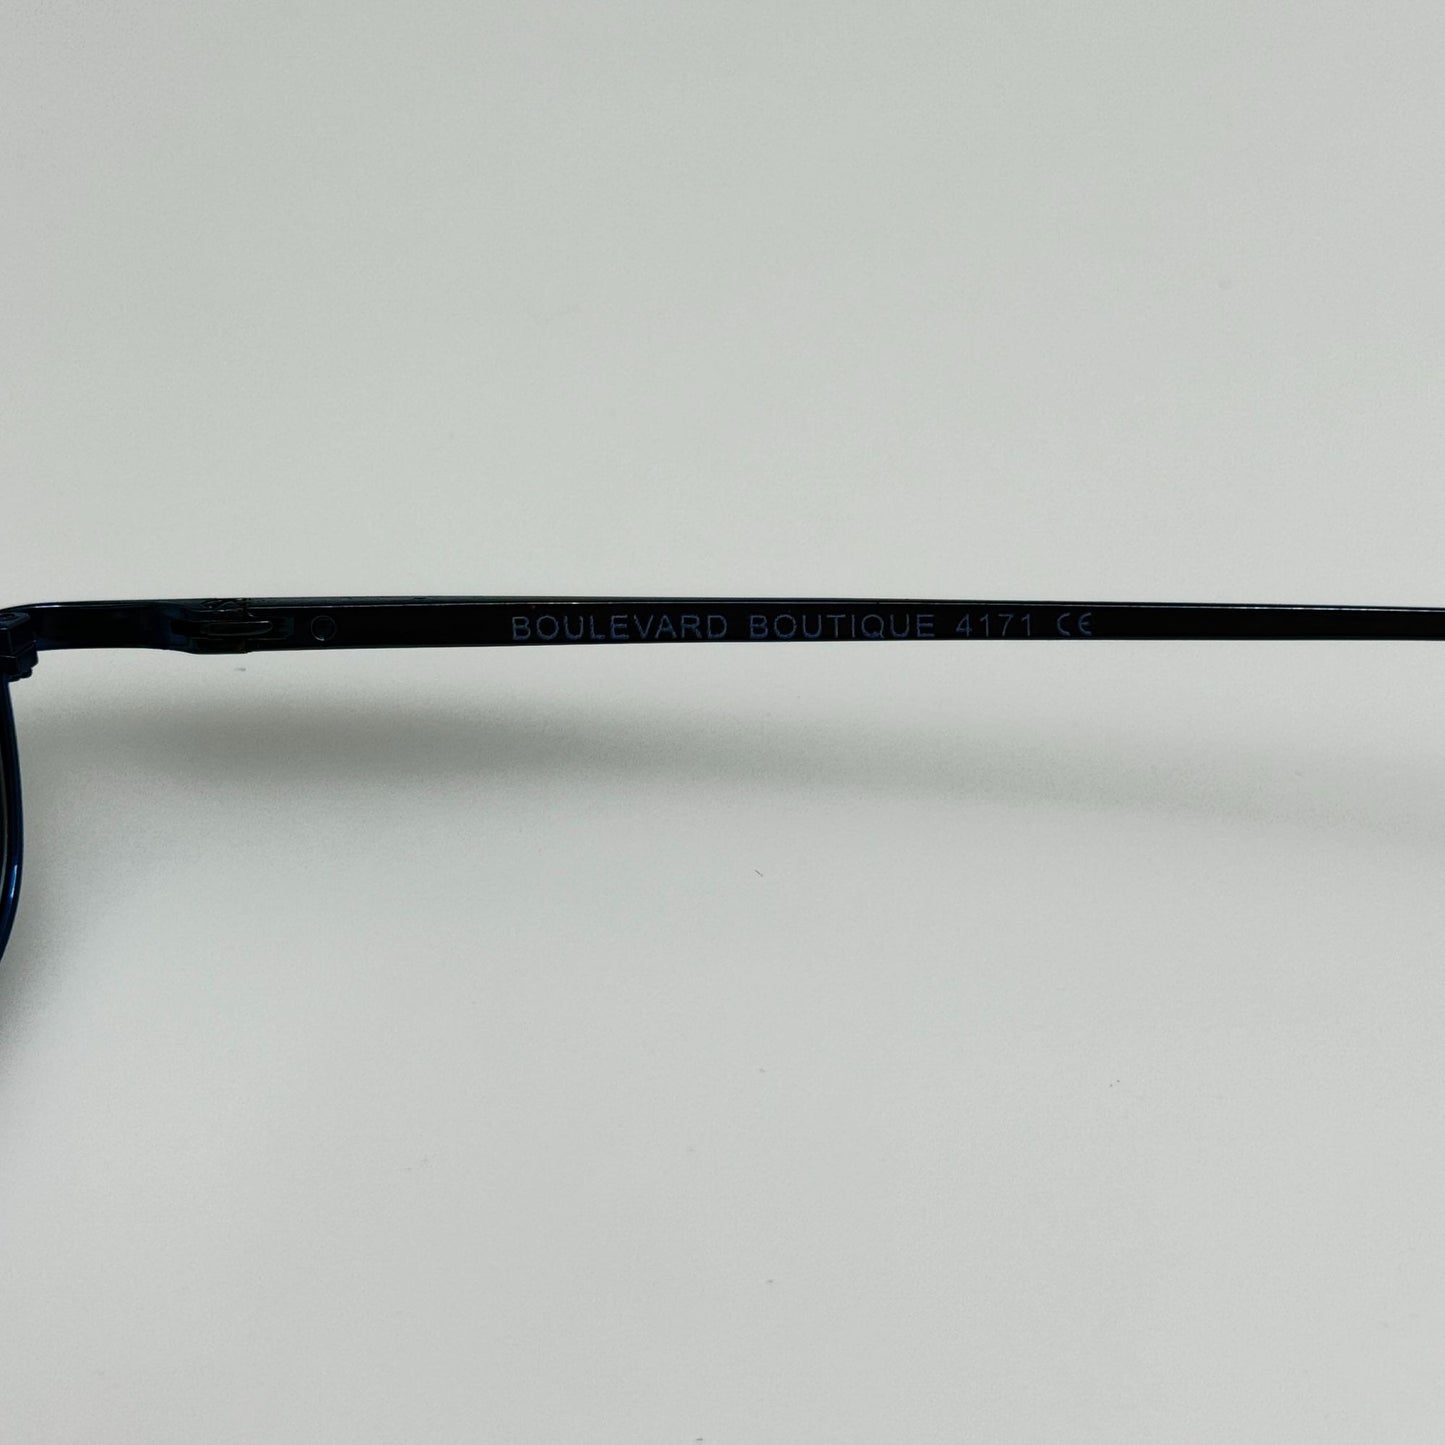 Boulevard Boutique Eyeglasses Eye Glasses Frames 4171 Blue 47-18-140